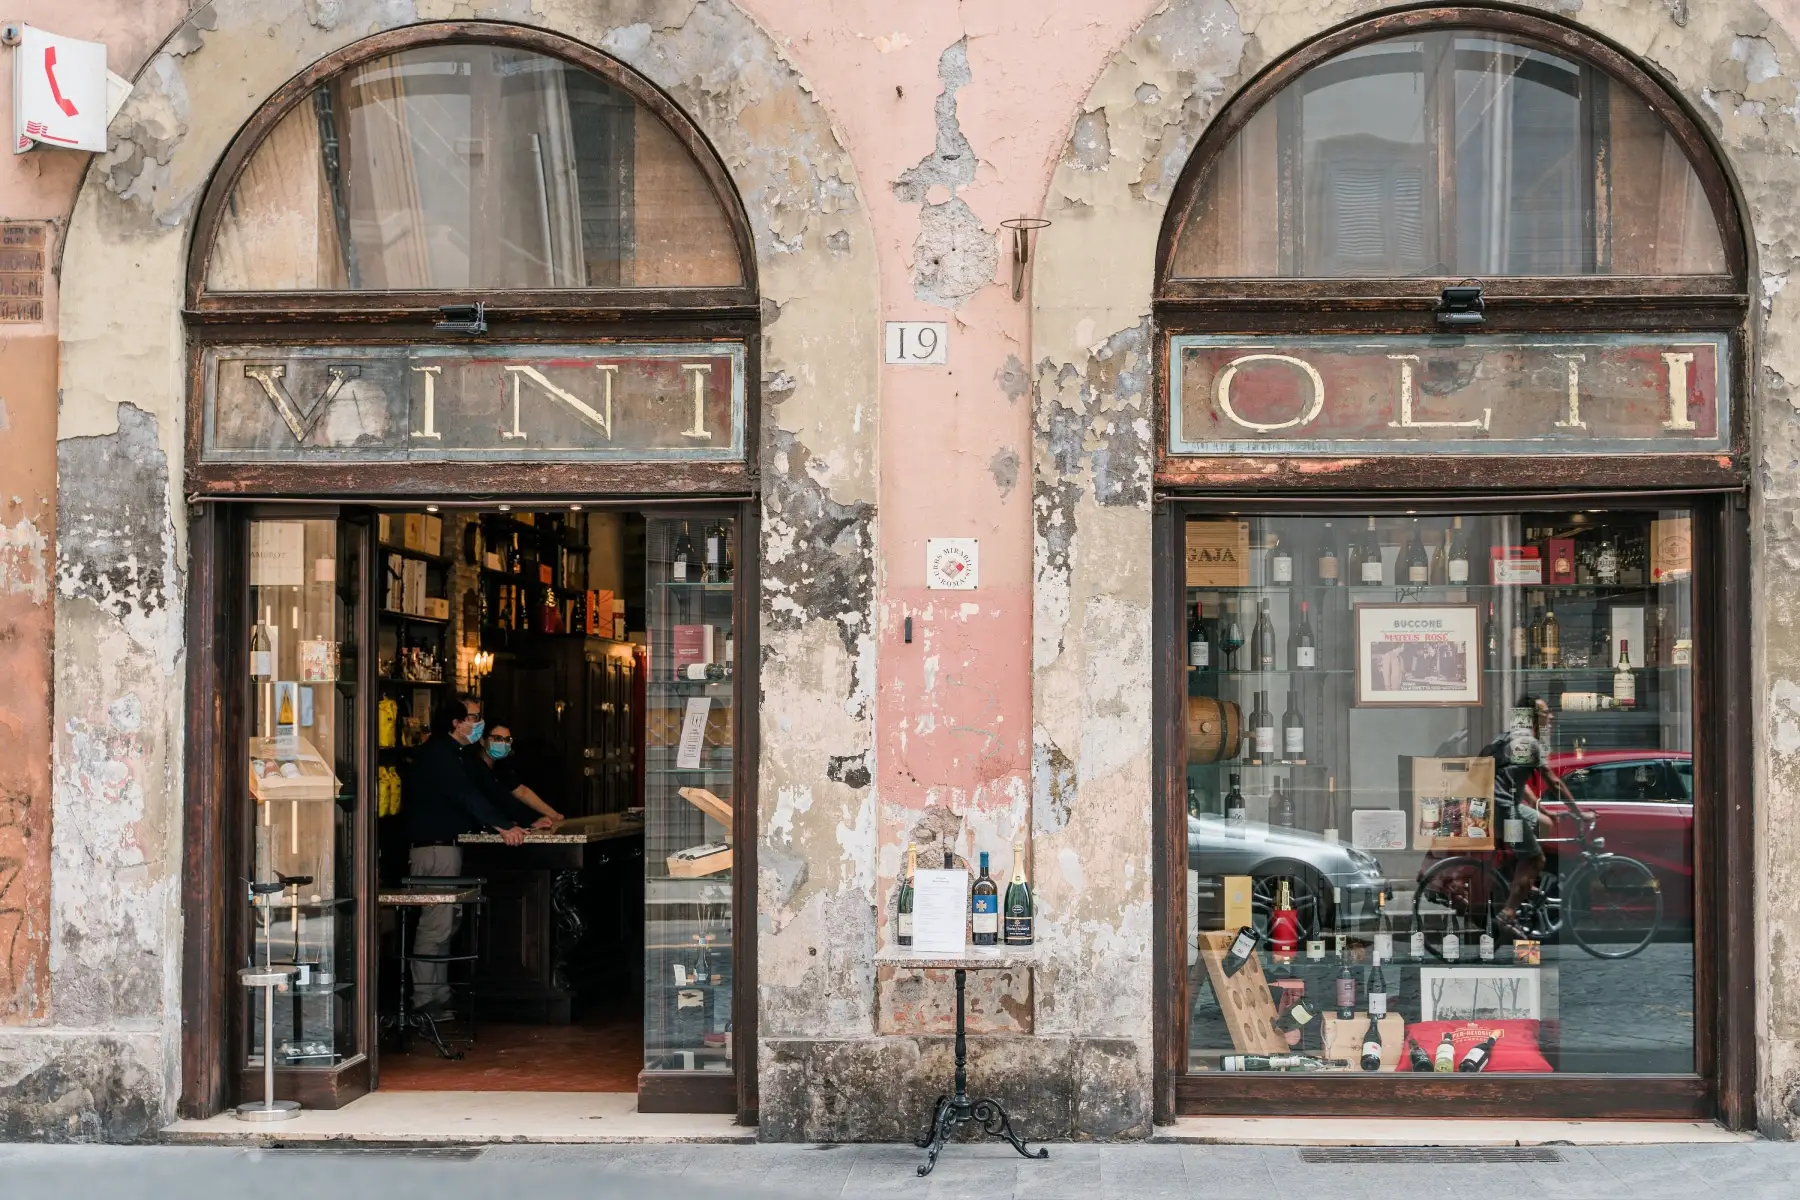 An enoteca (wine shop) in Rome